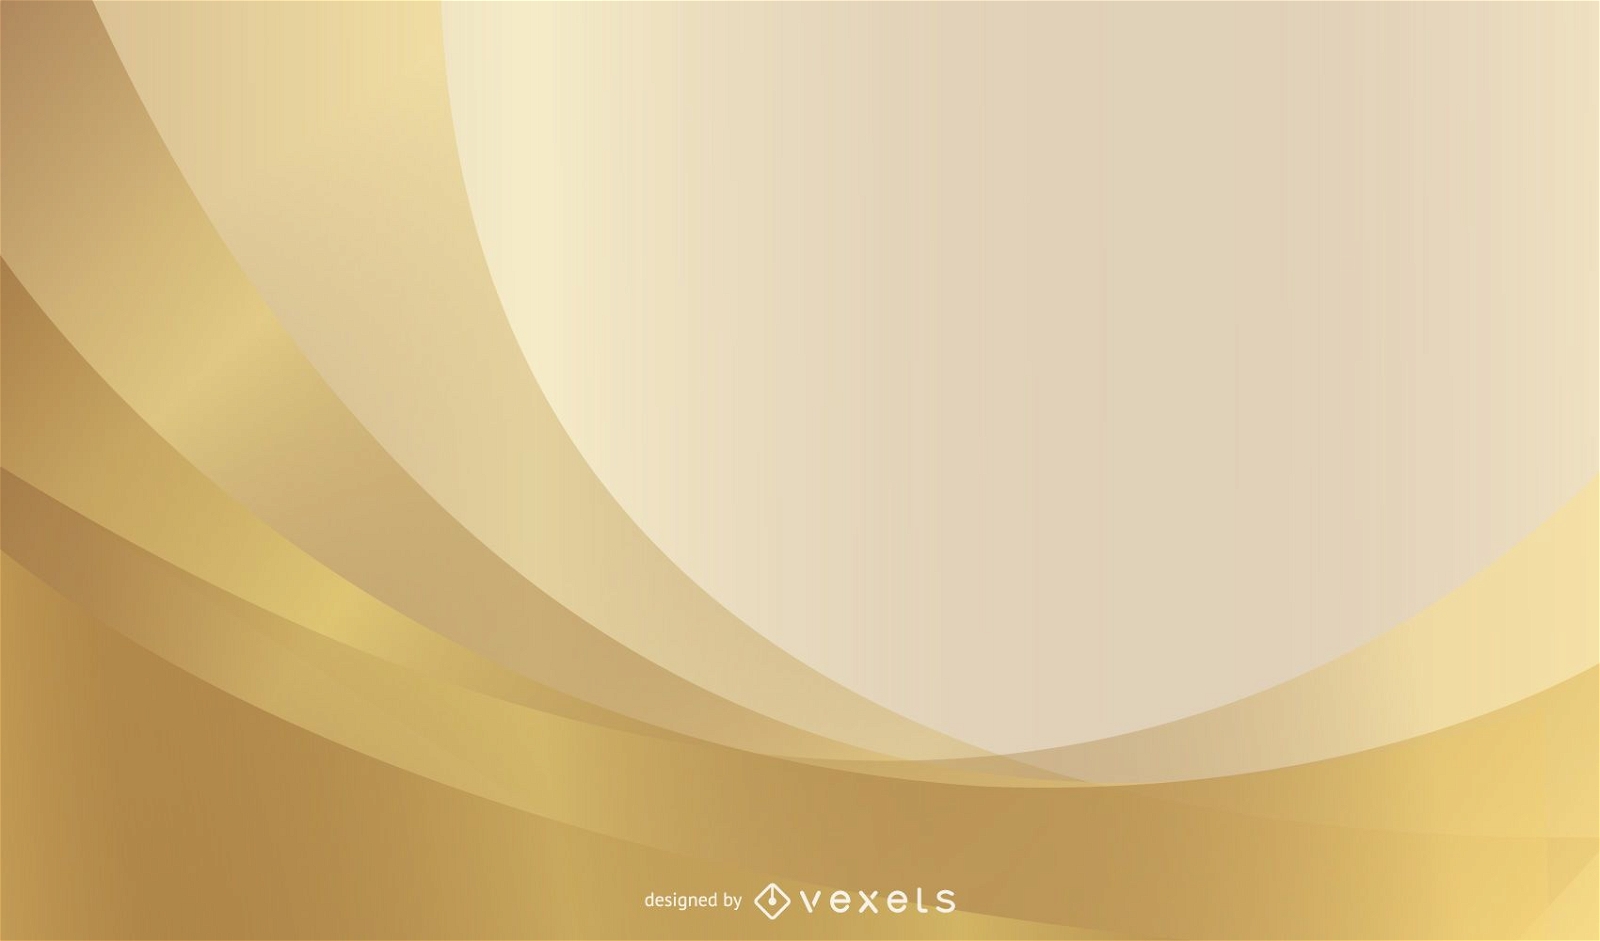 Golden Waves Background PSD Vector Download